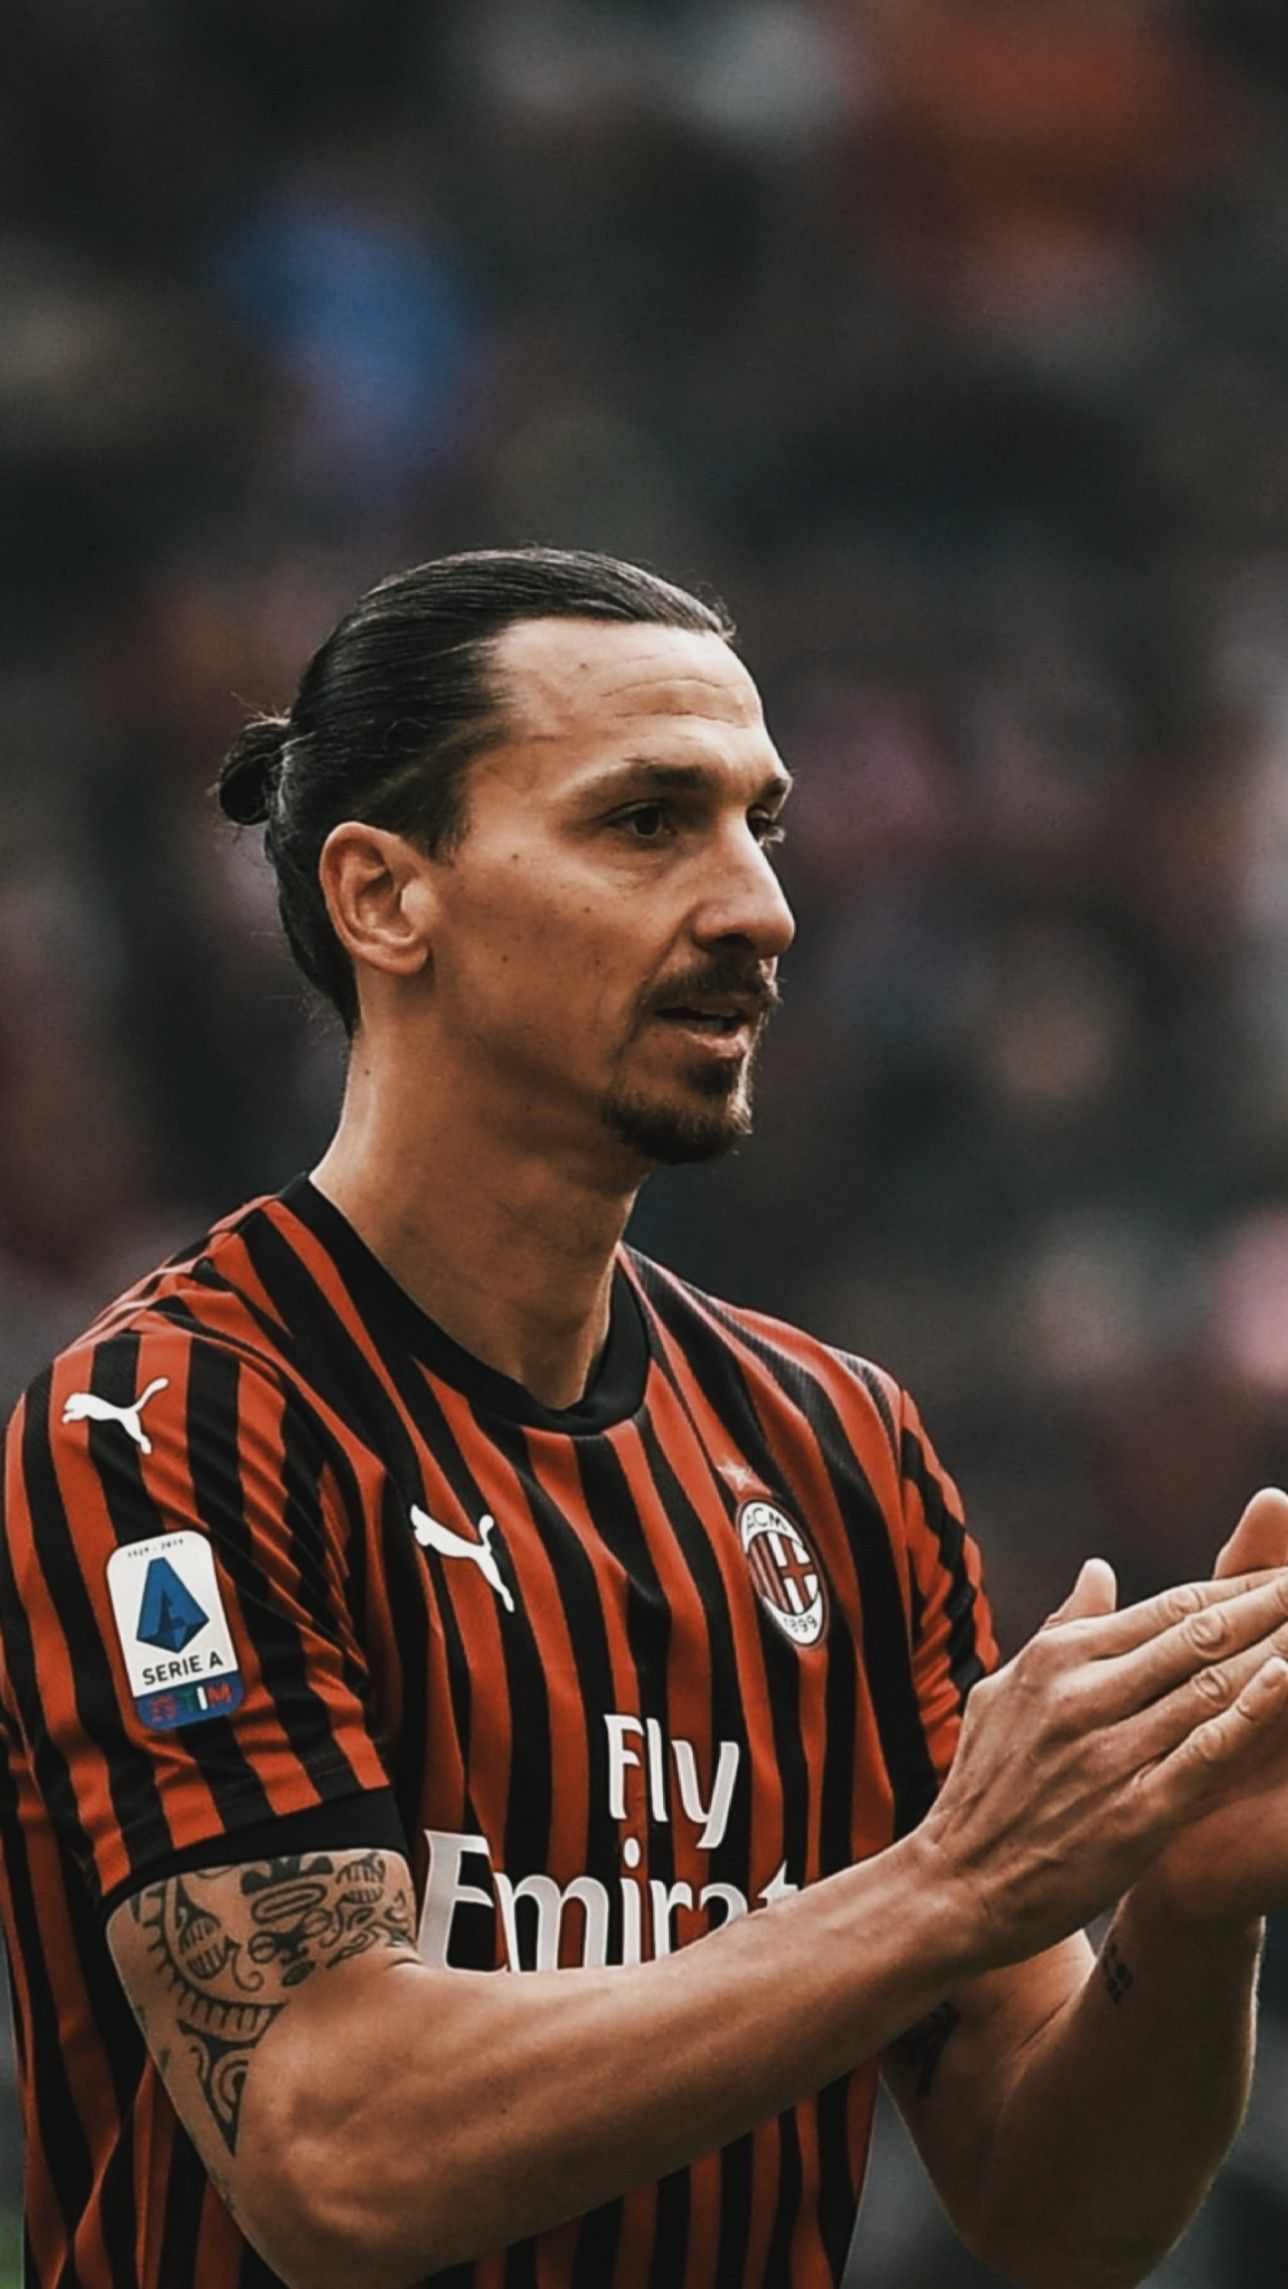 1288x2289 Zlatan Ibrahimovic | Fotografia de futebol, Jogadores de futebol, Imagens de futebol